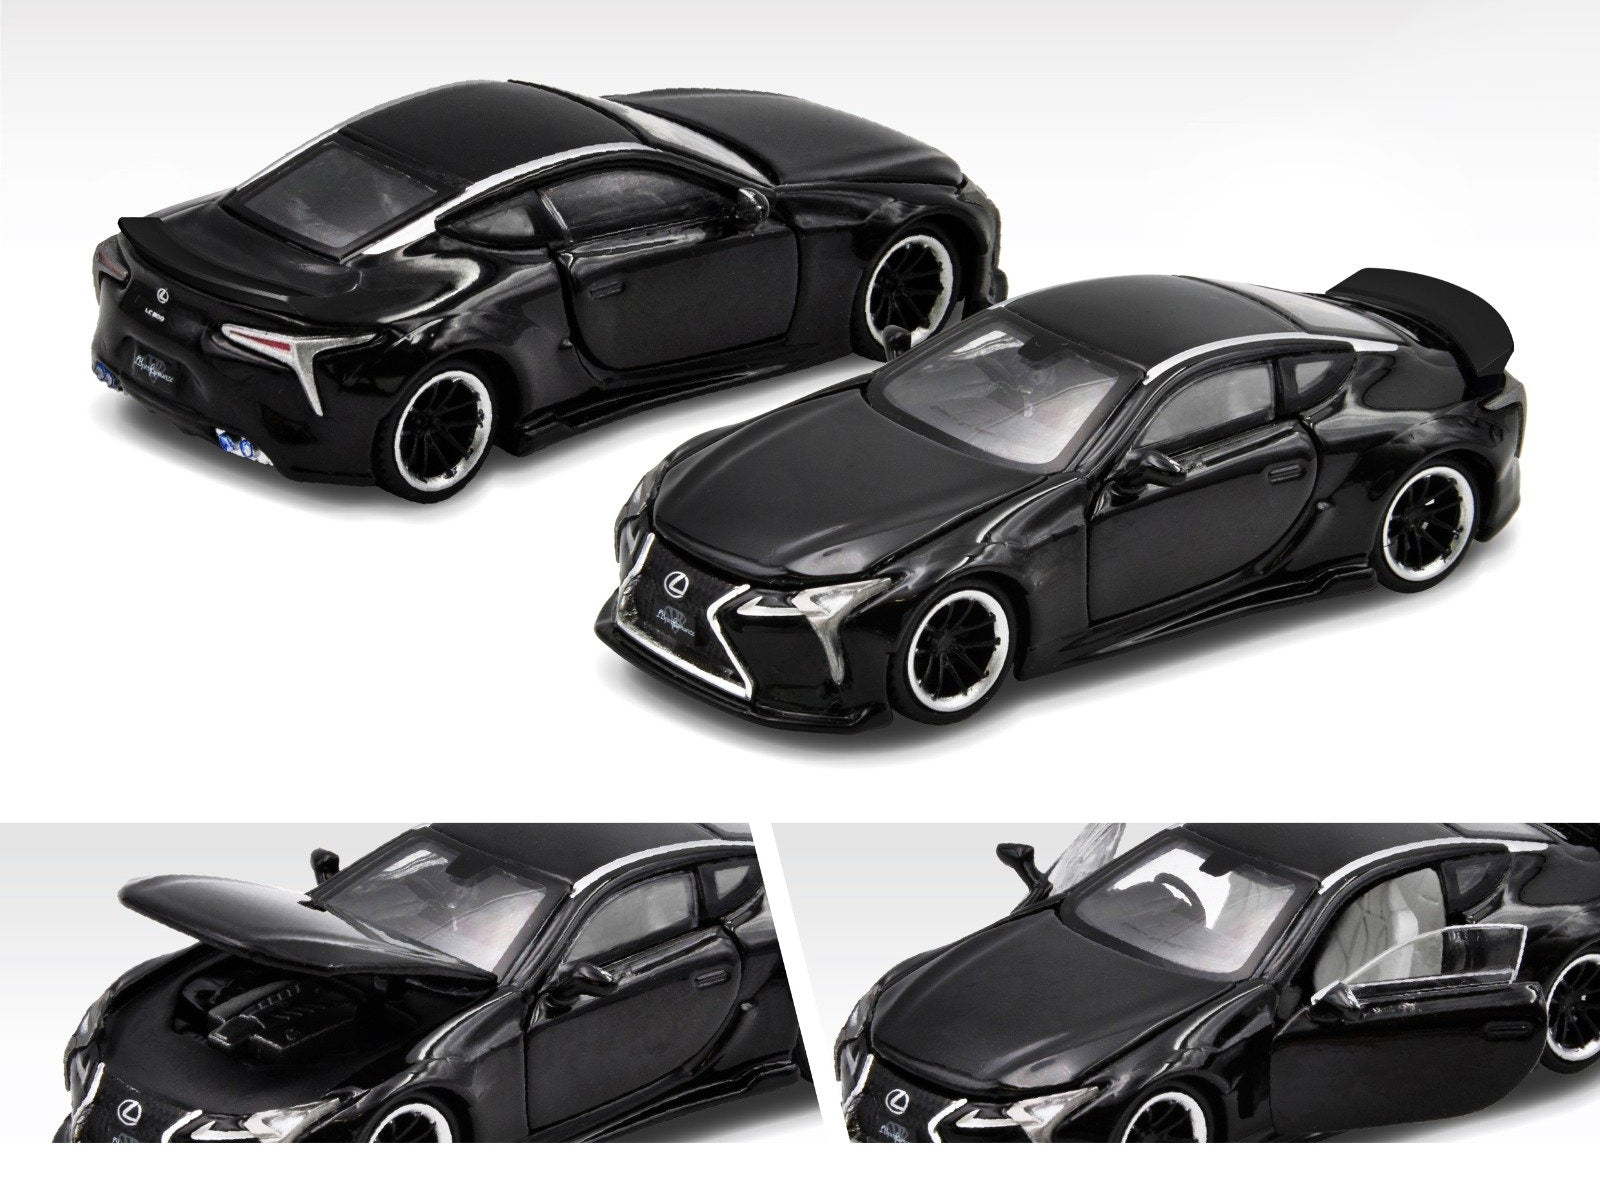 Lexus LC500 LB Works RHD (Right Hand Drive) Dark Black Limited Edition to 1200 pieces 1/64 Diecast Model Car by Era Car